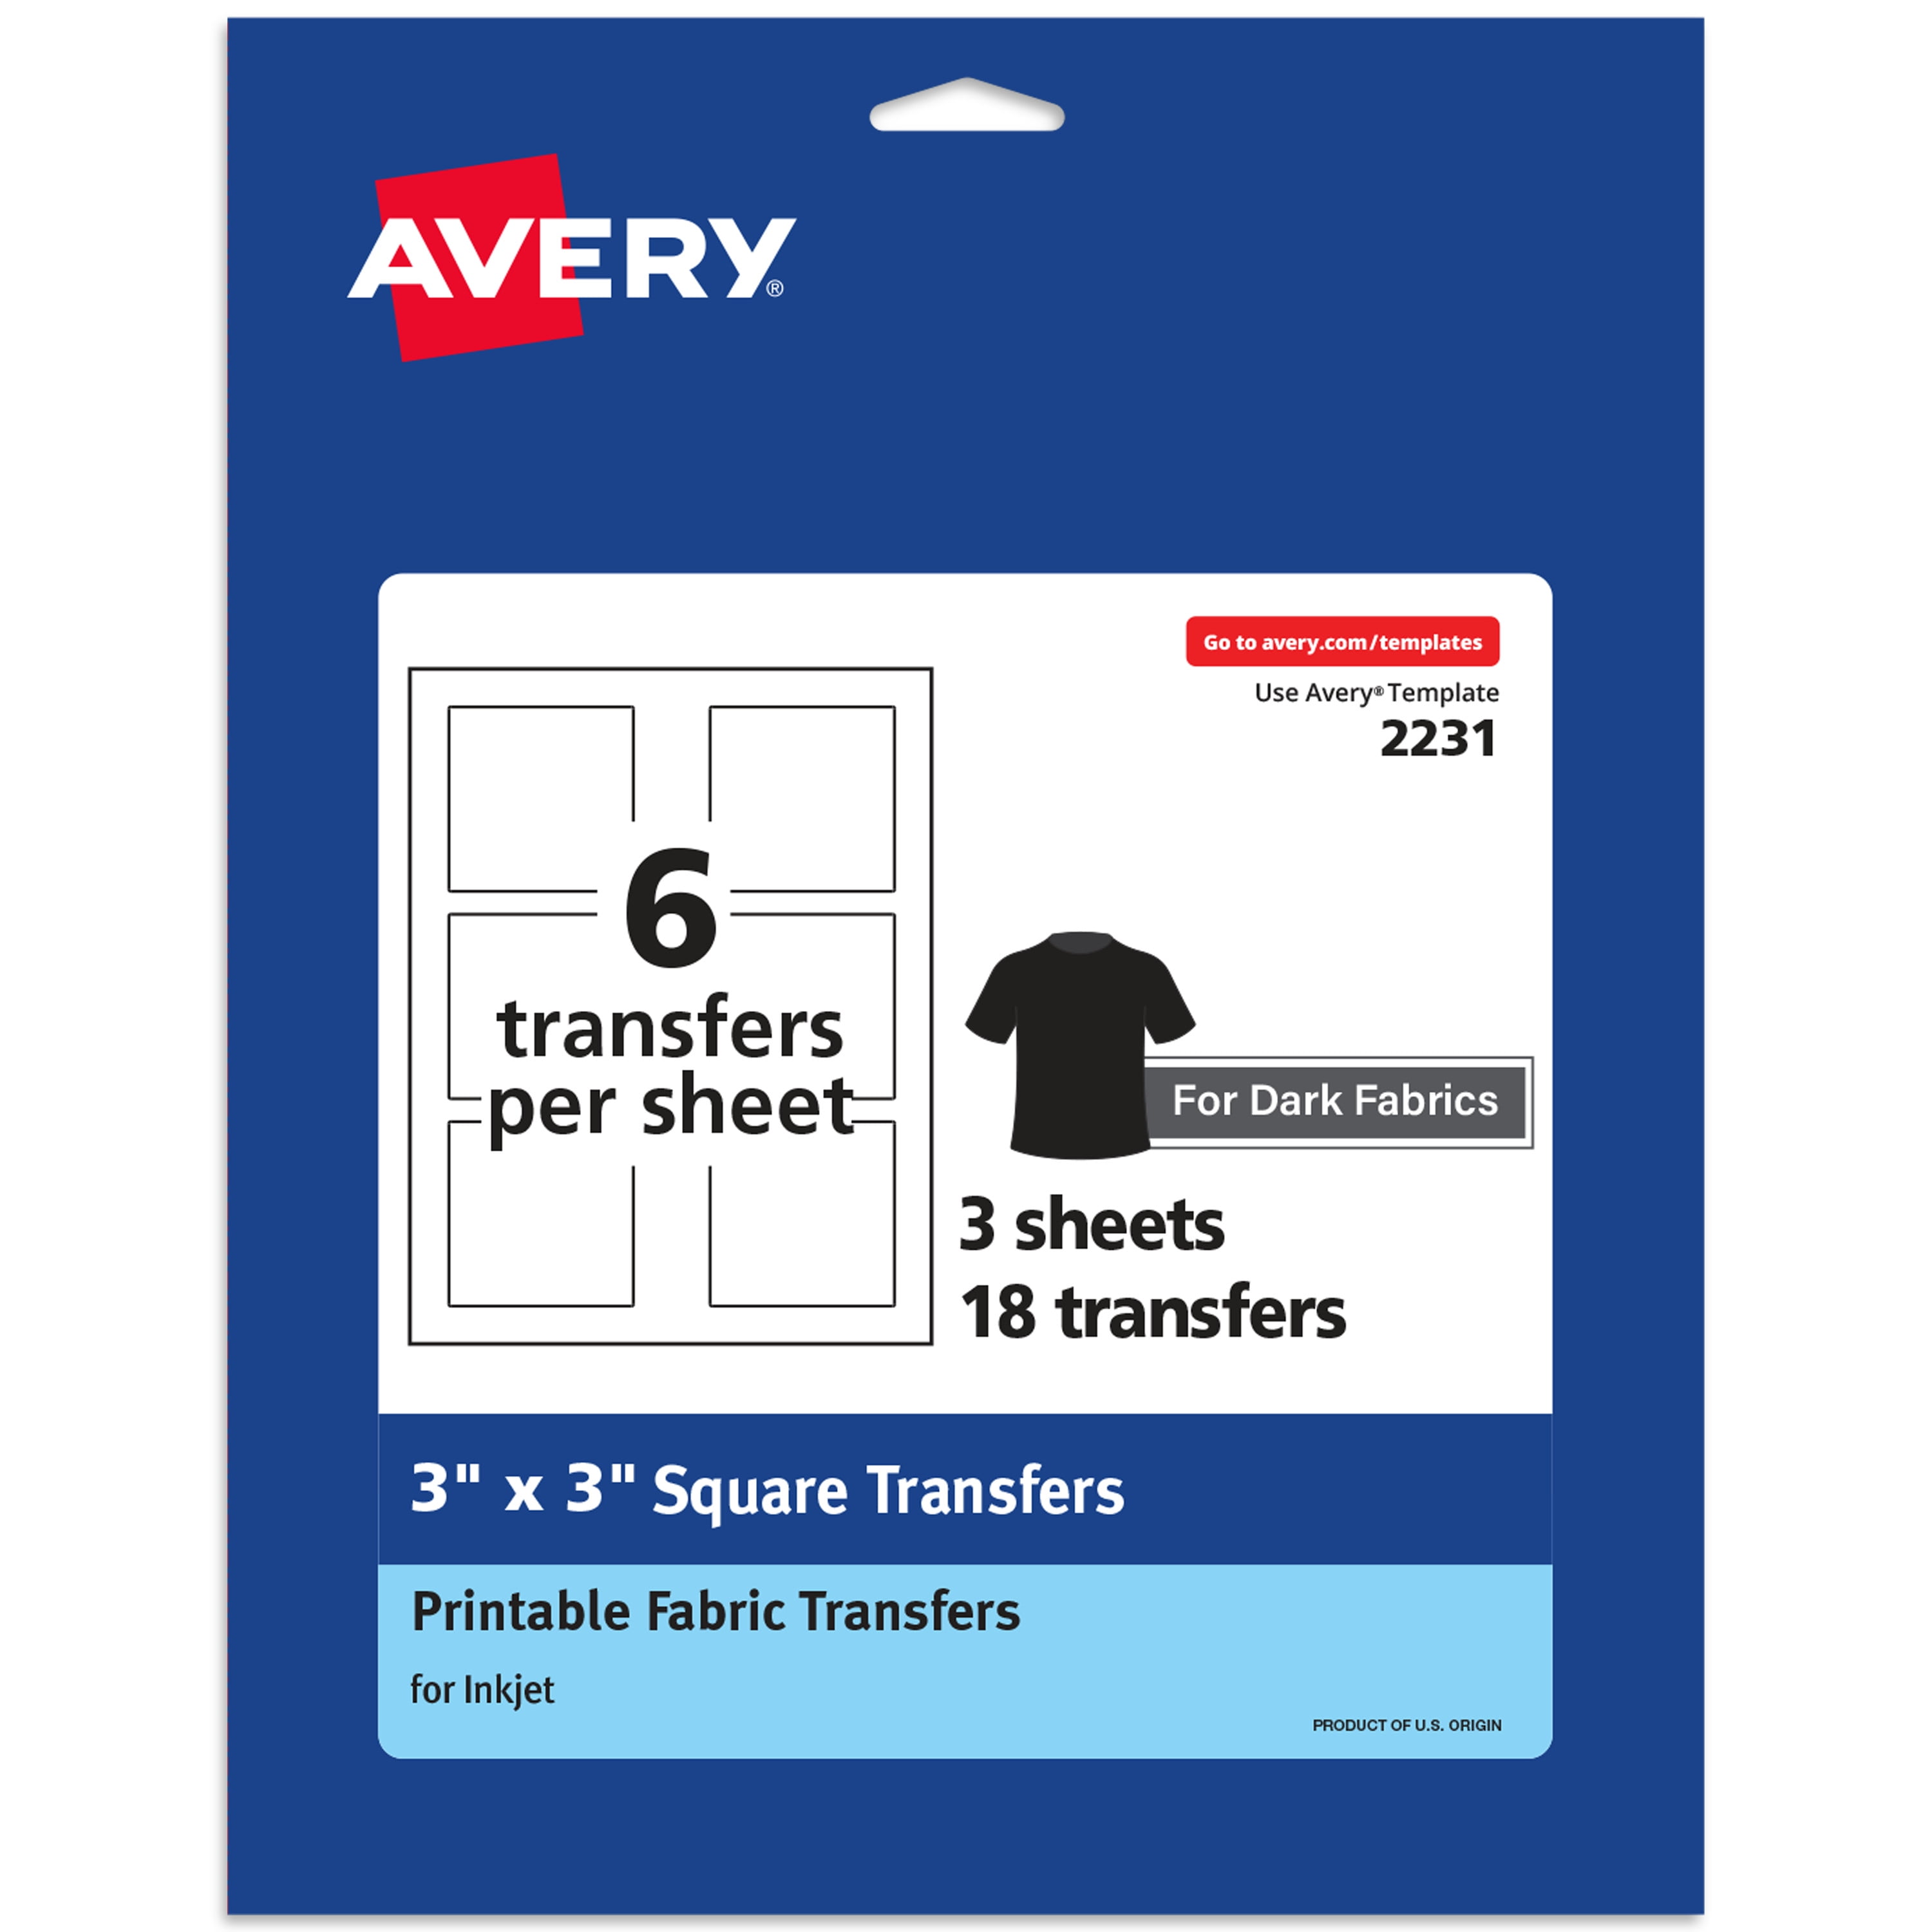 Avery Fabric Transfer – Dark